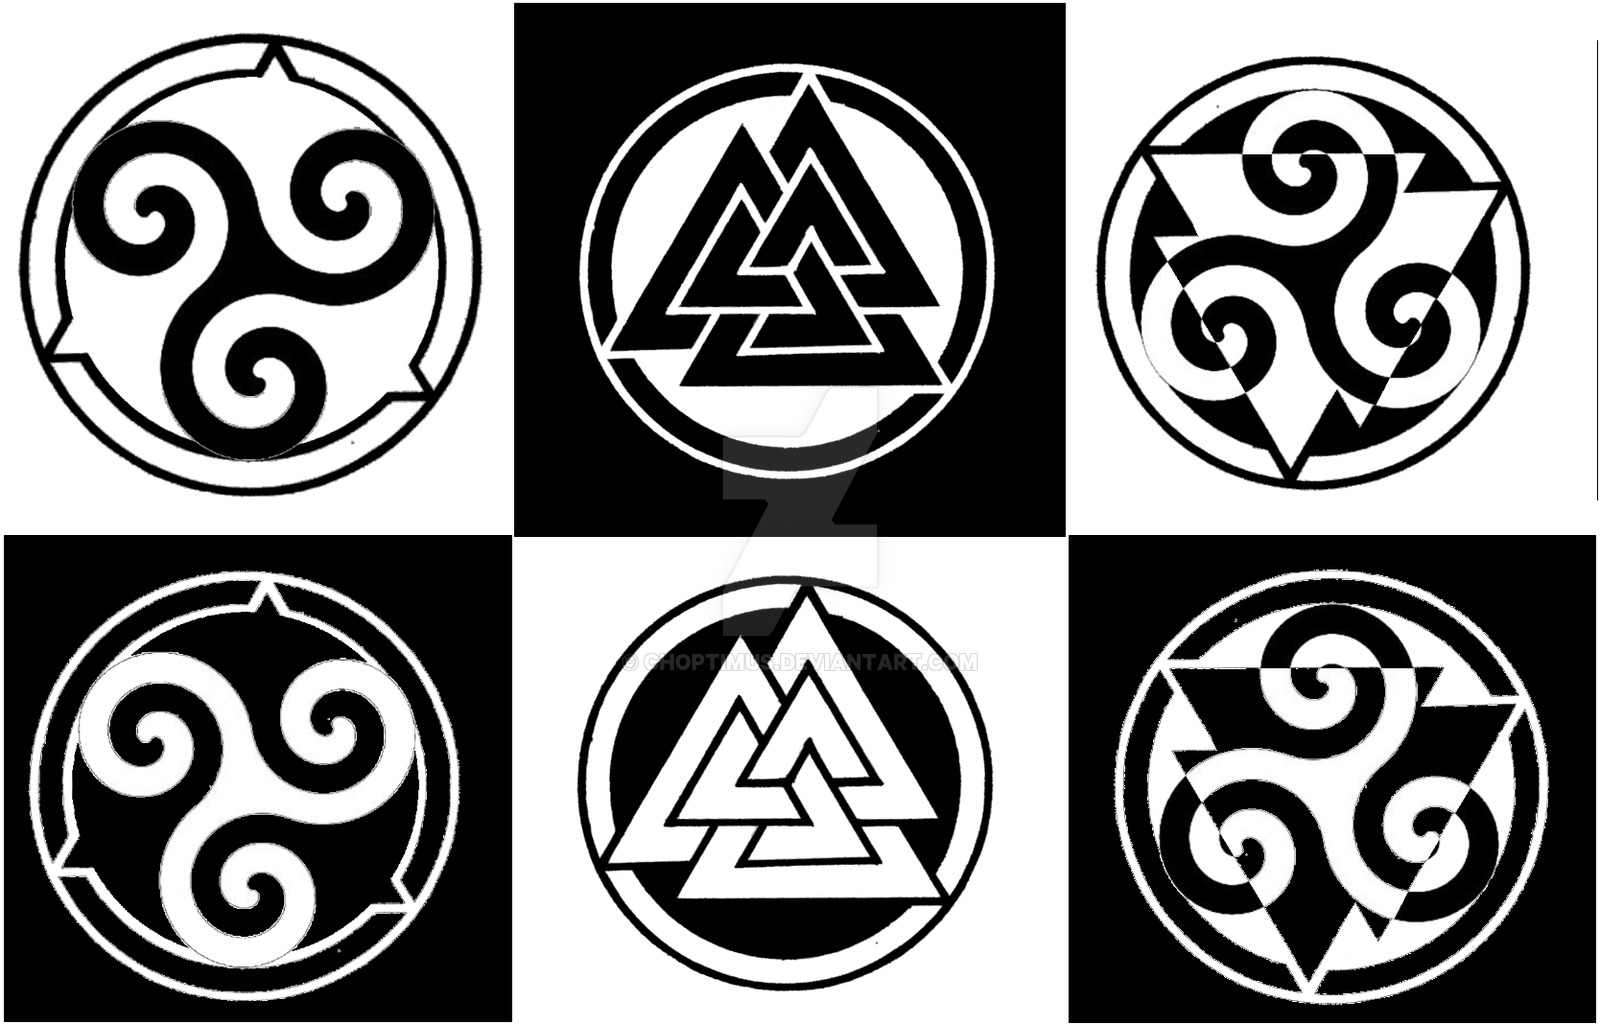 Кельтский символ Трискелион